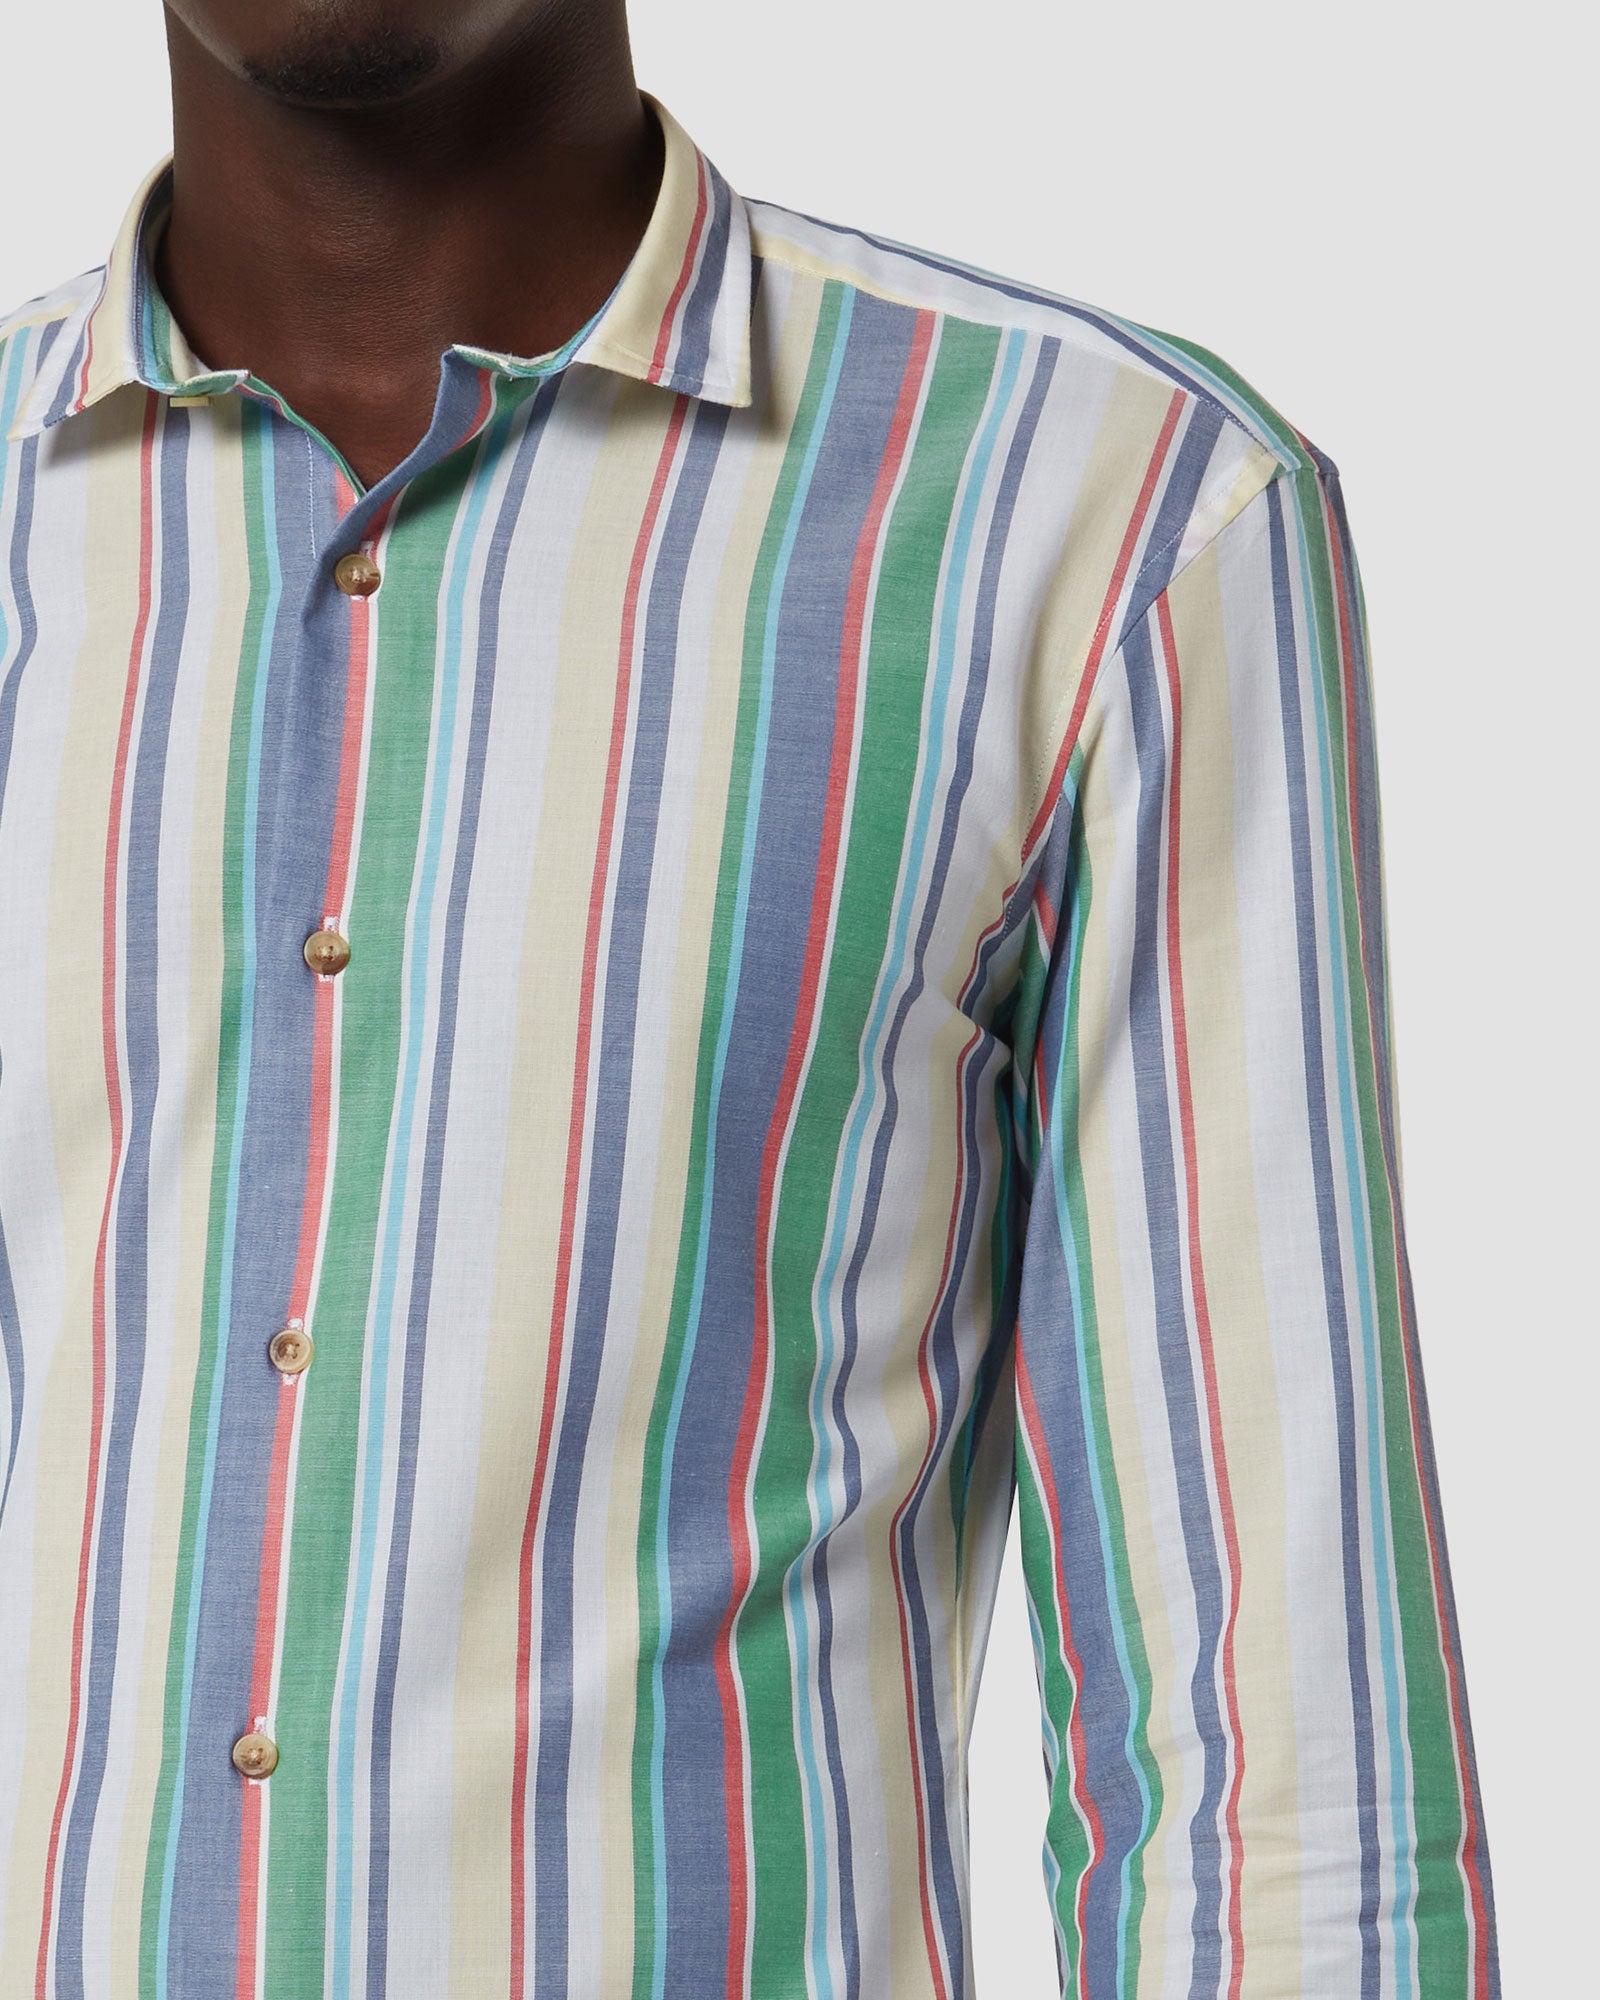 Bombay Shirt Company - Somelos Ice Lolly Striped Shirt